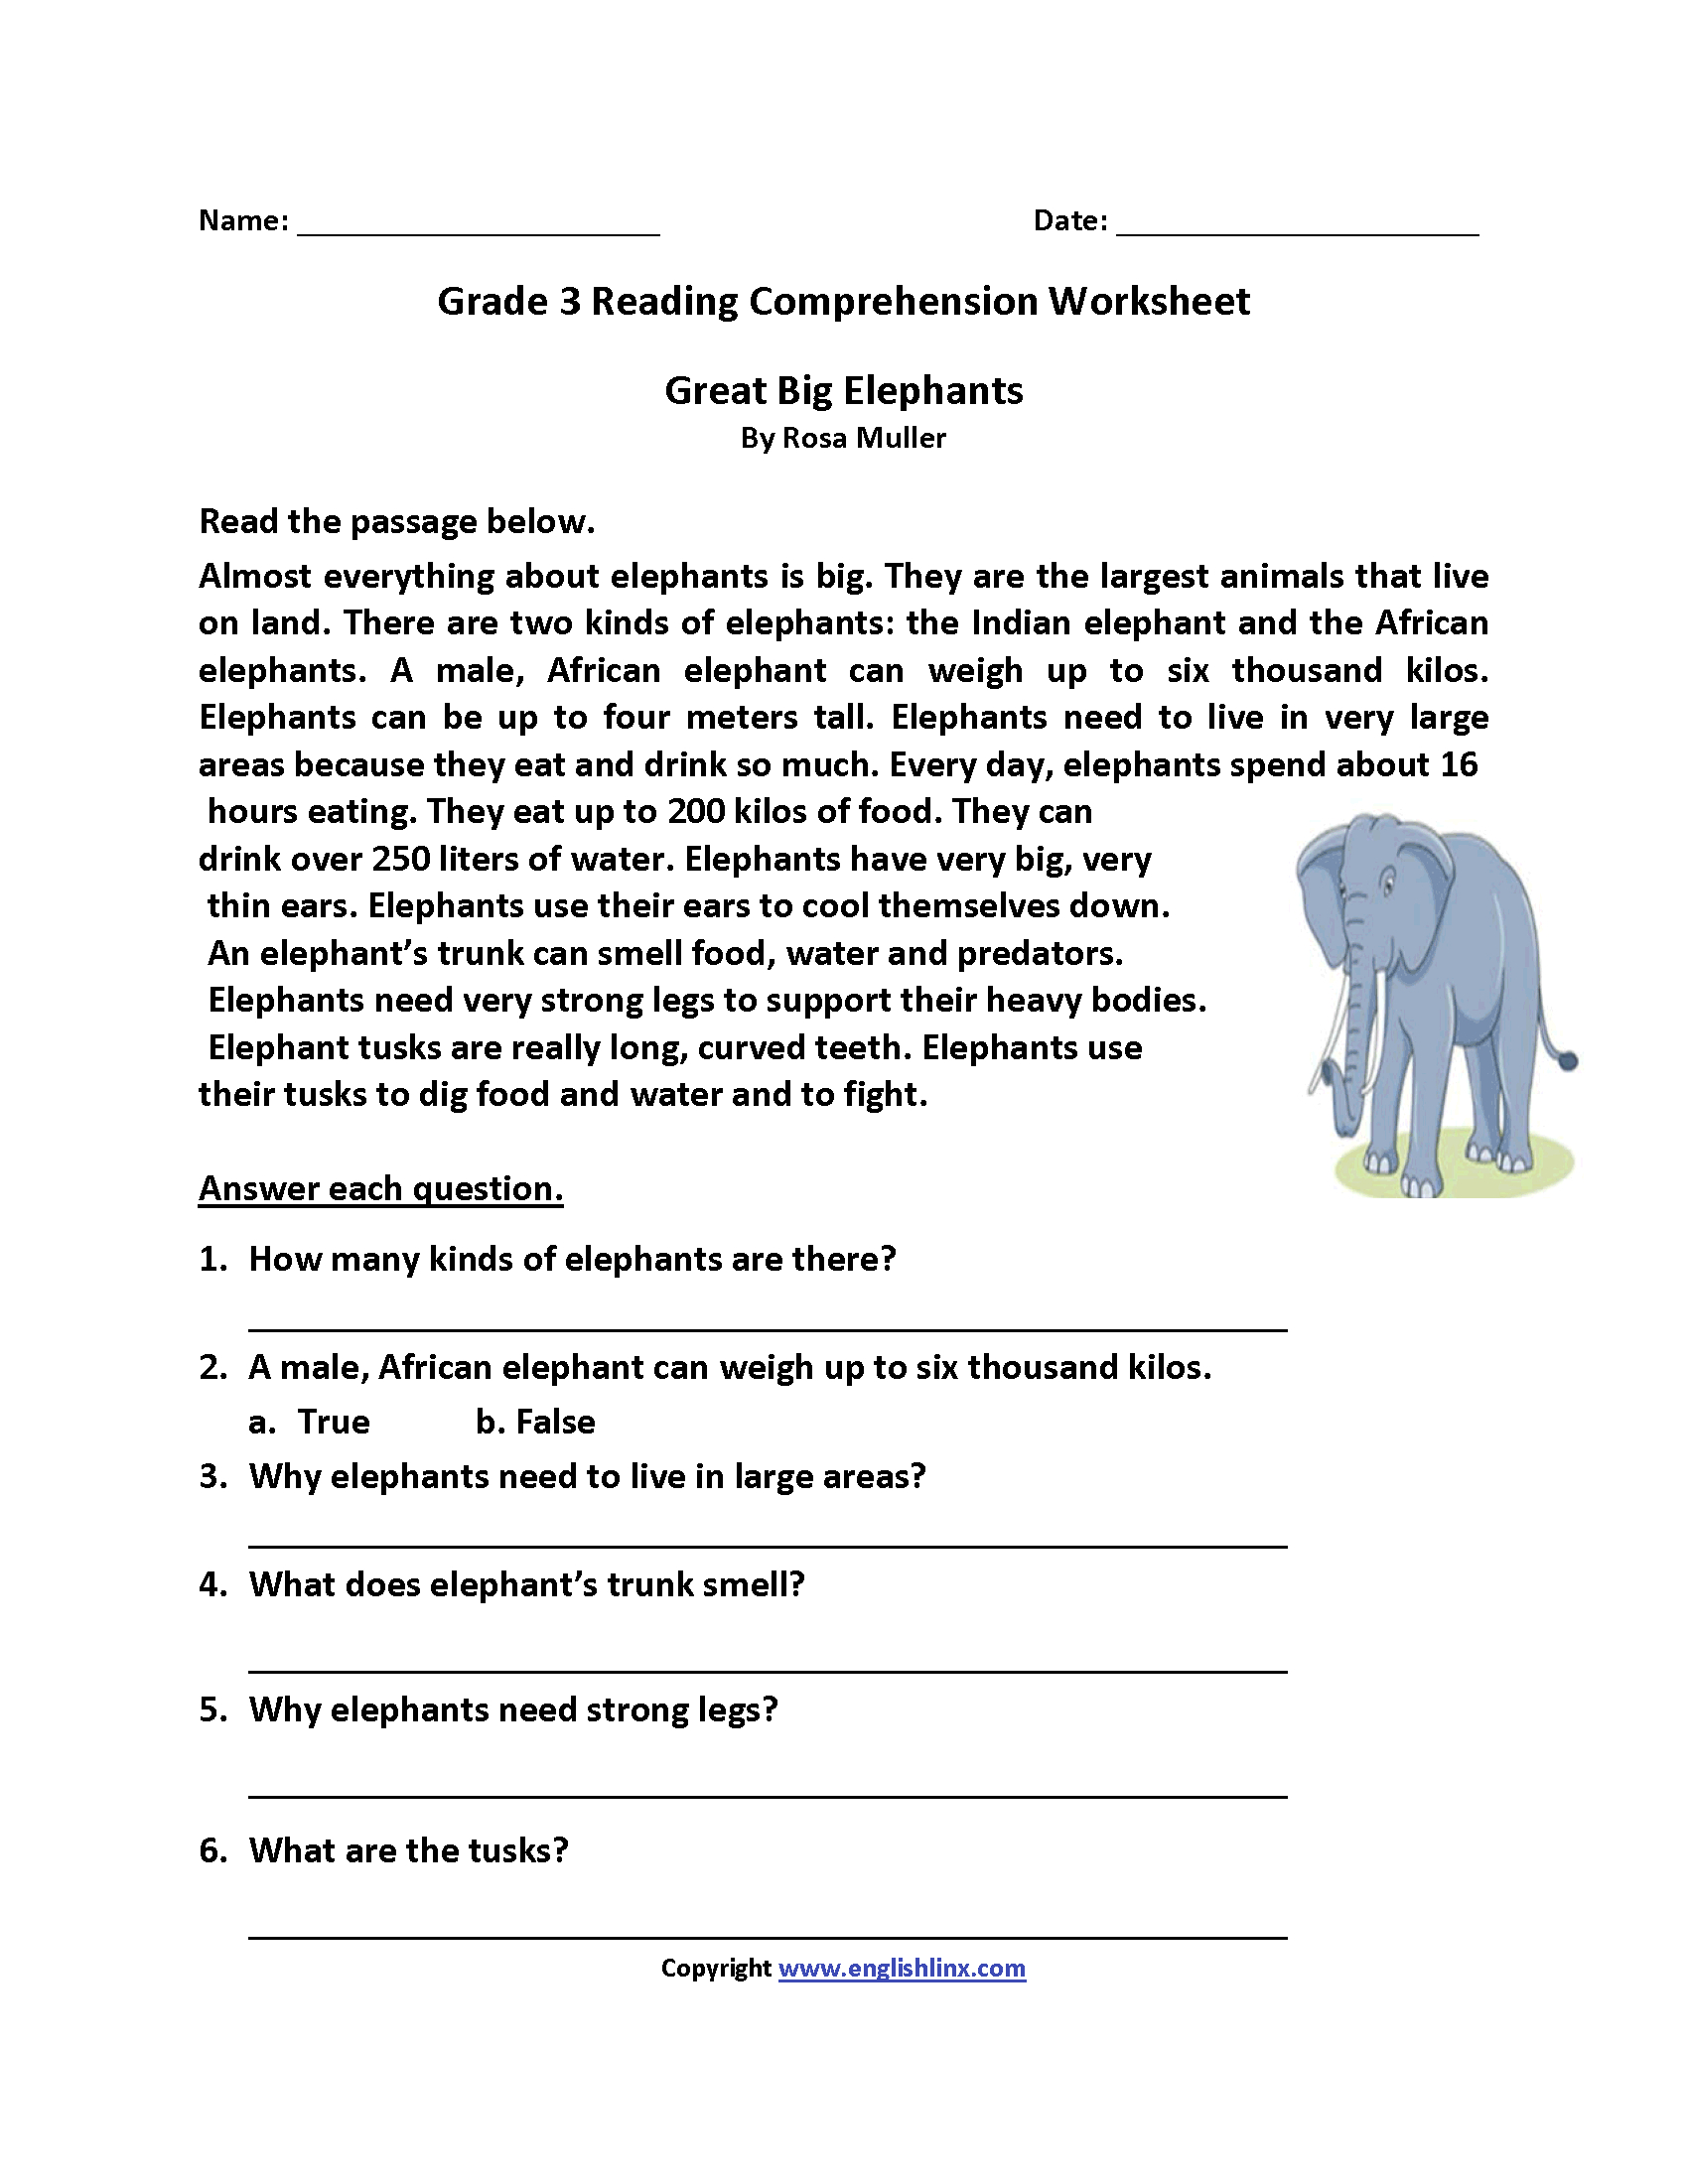 Great Big Elephants Third Grade Reading Worksheets | Board | Reading - Third Grade Reading Worksheets Free Printable